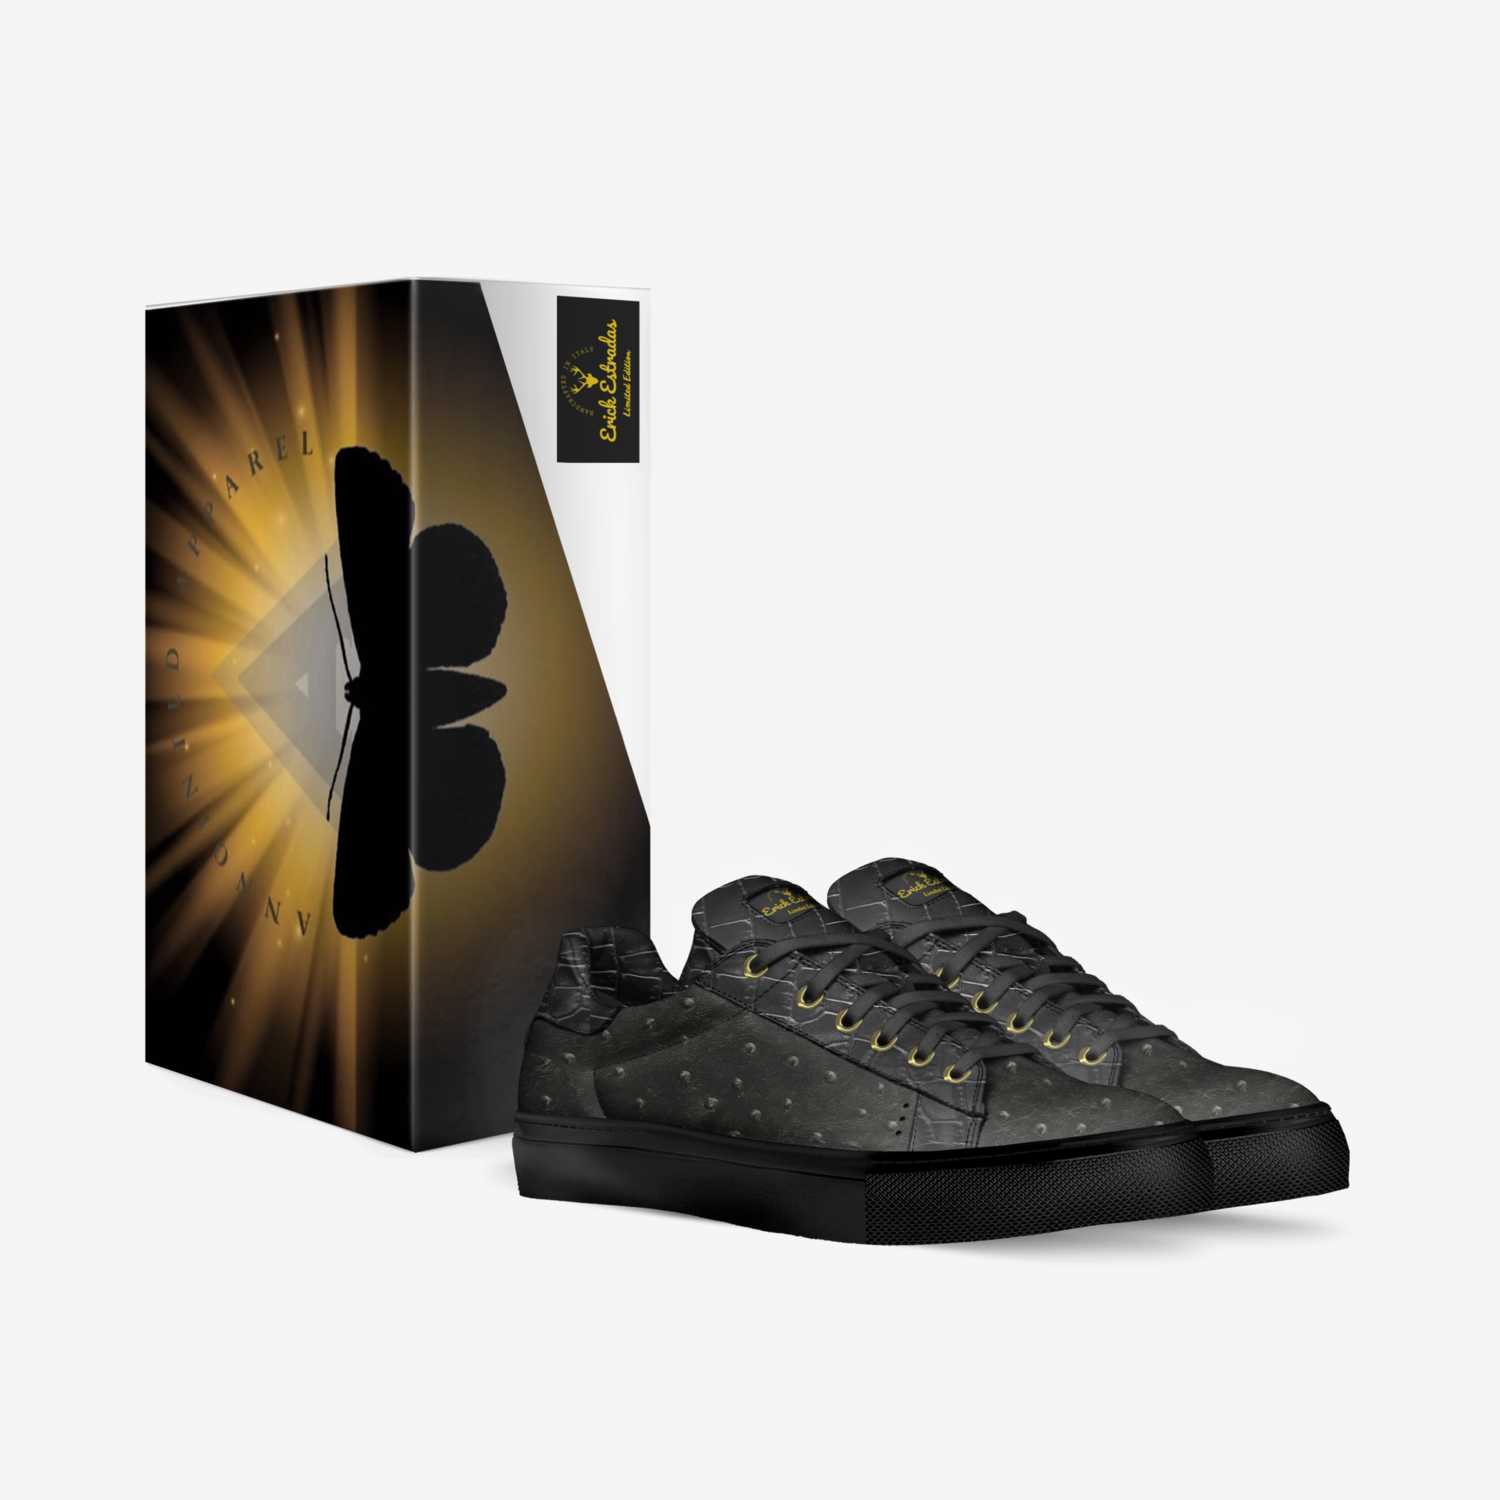 Erick Estradas custom made in Italy shoes by Erick Smith | Box view